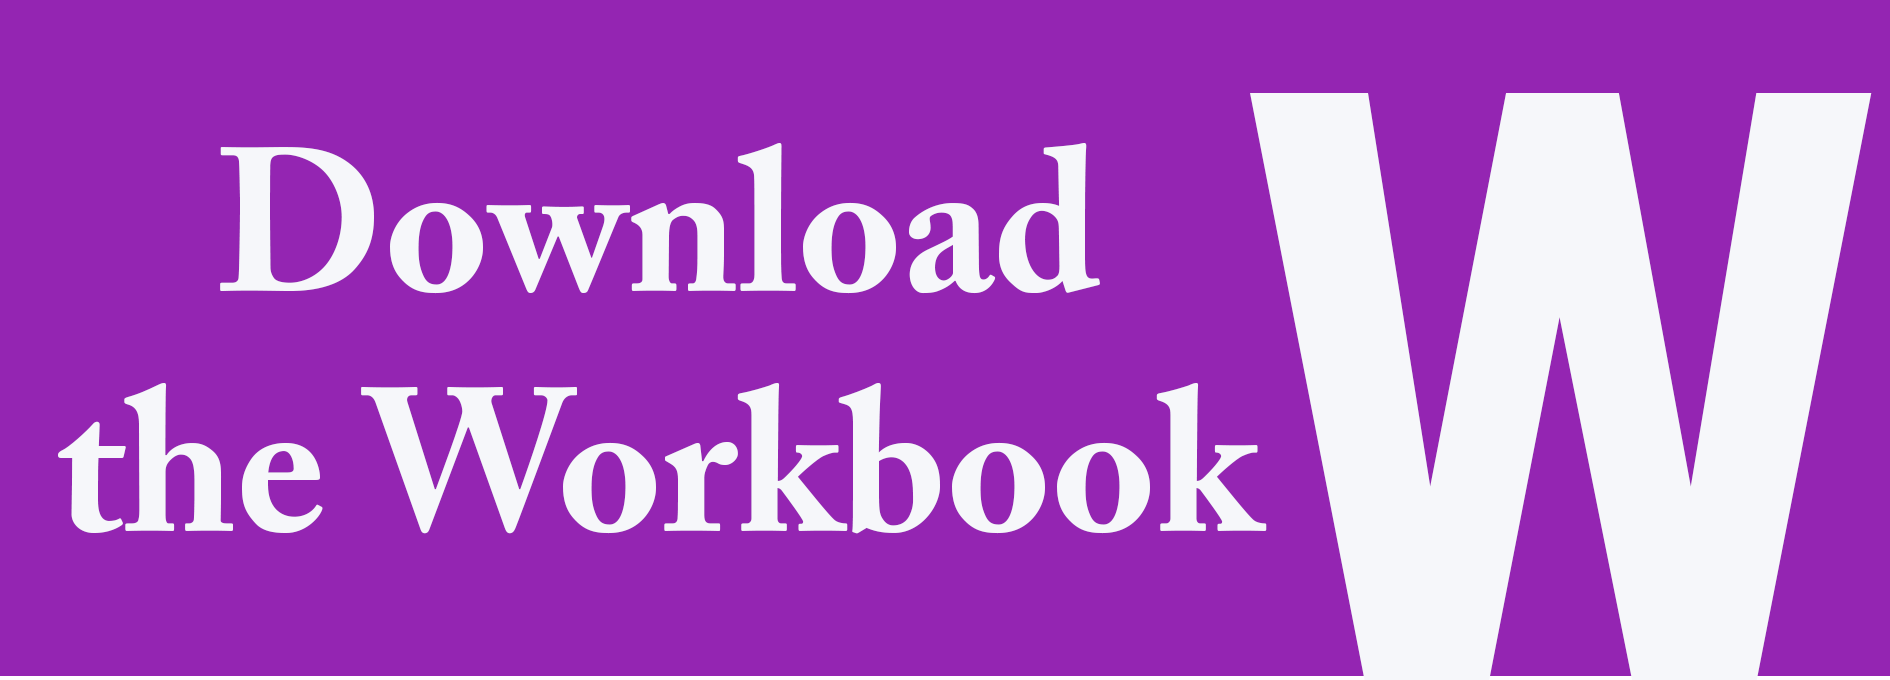 download the workbook